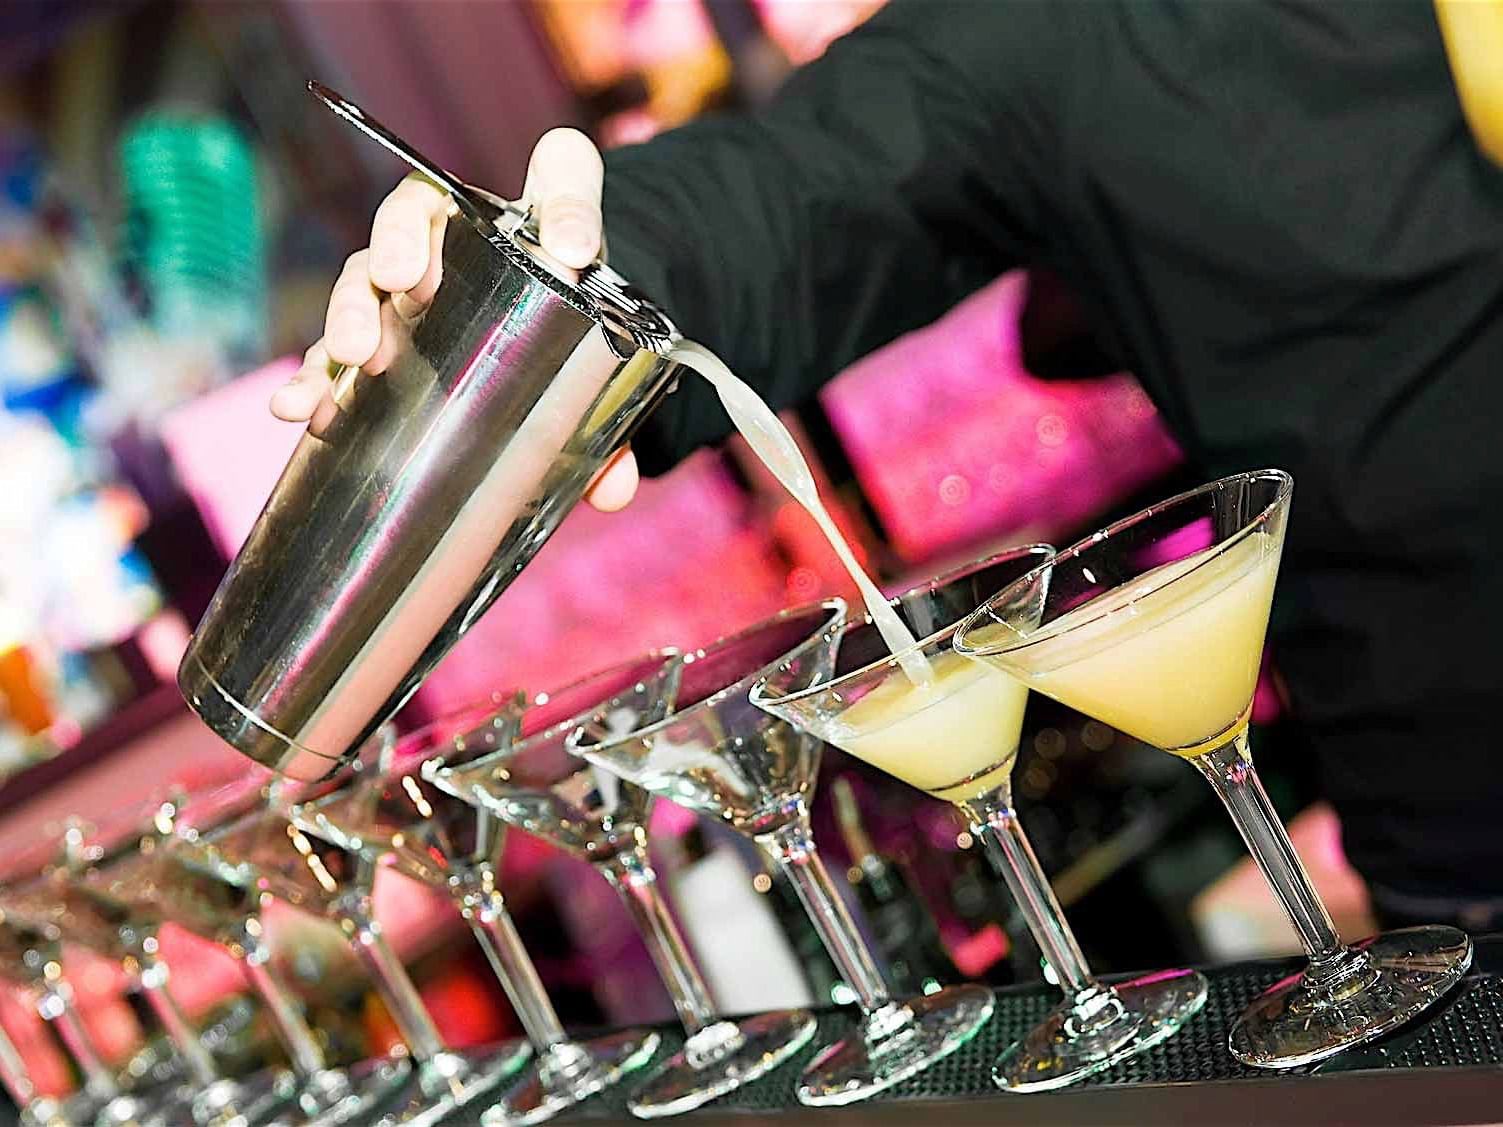 A bartender making cocktails at Sand Bar at Accra Hotels